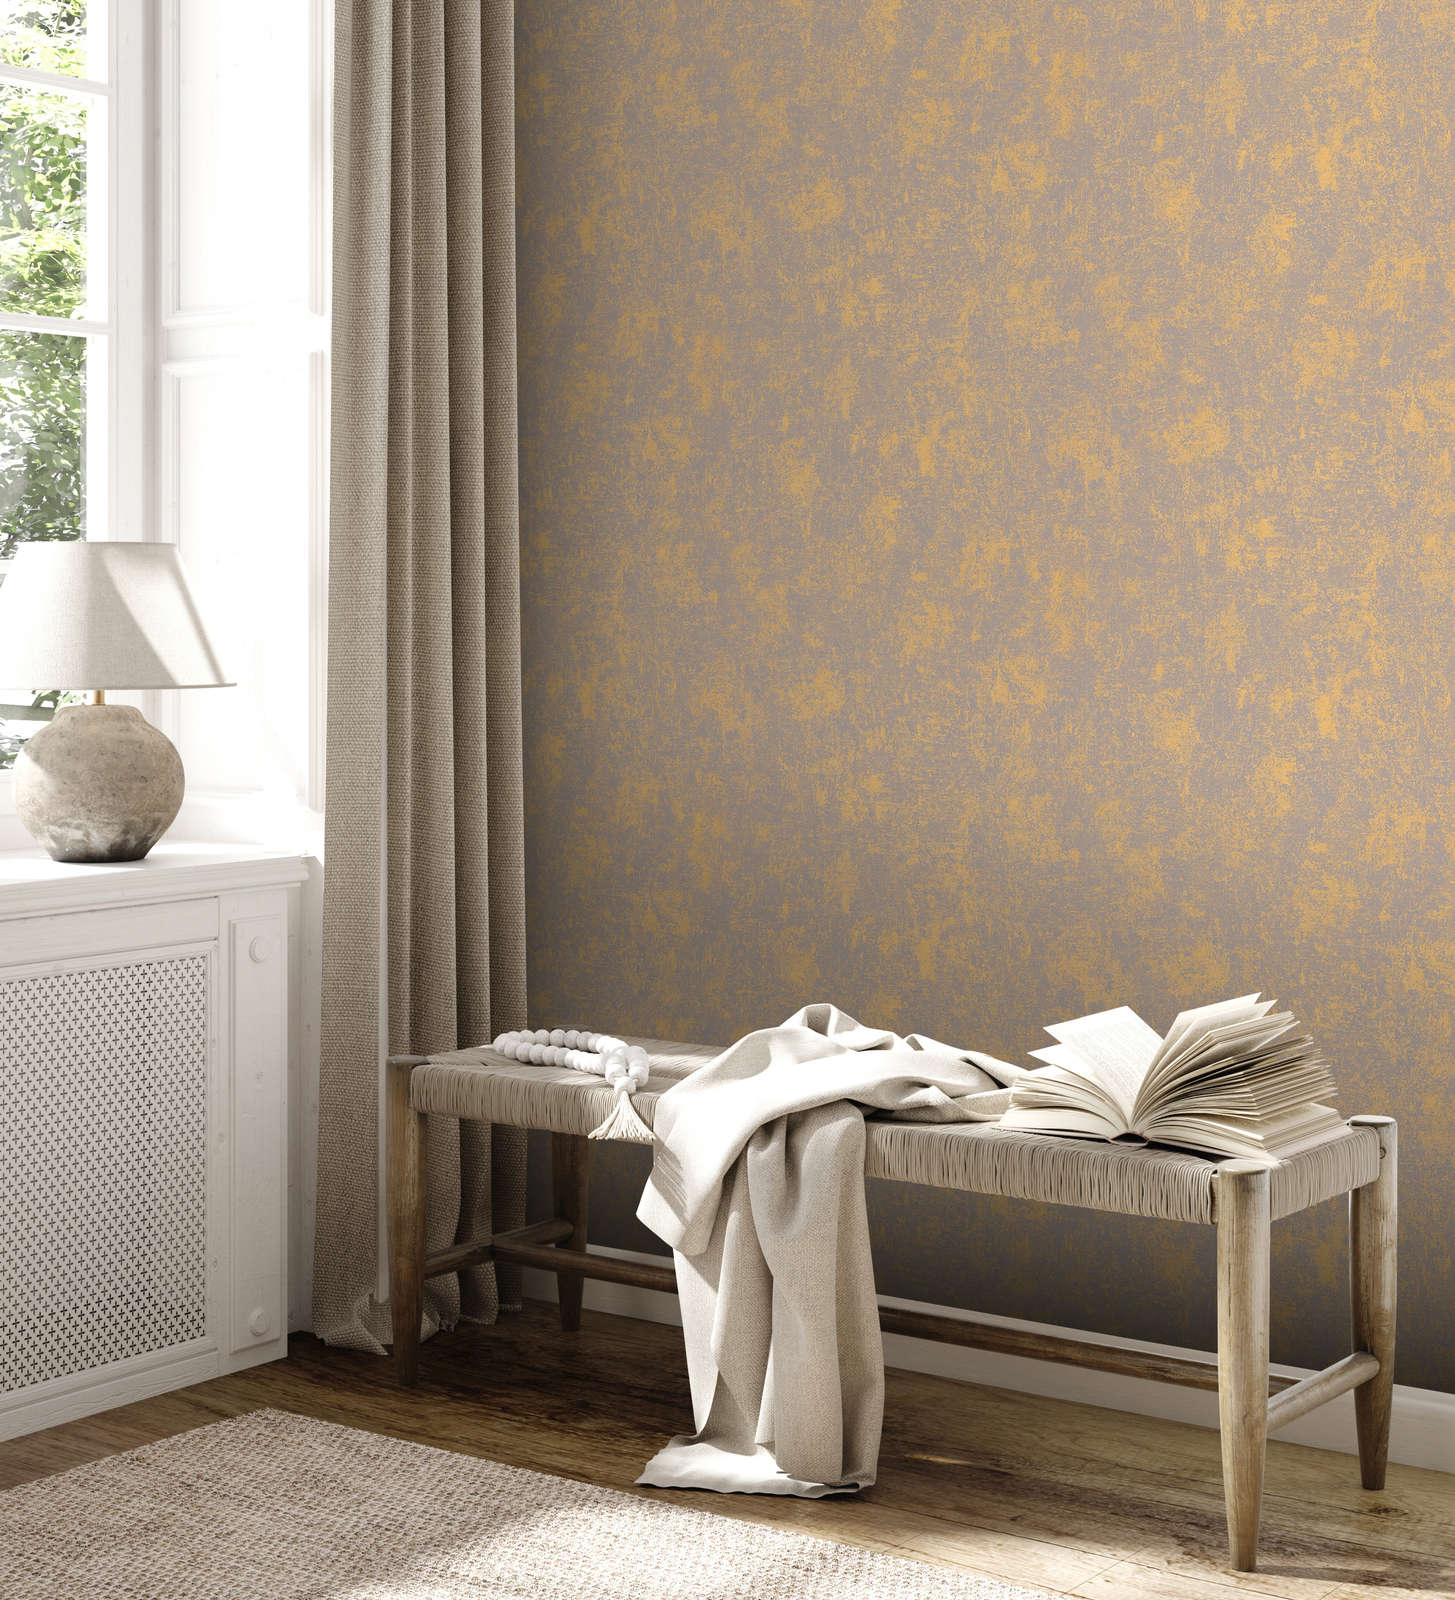             Glossy and metallic effect wallpaper smooth - gold, grey, metallic
        